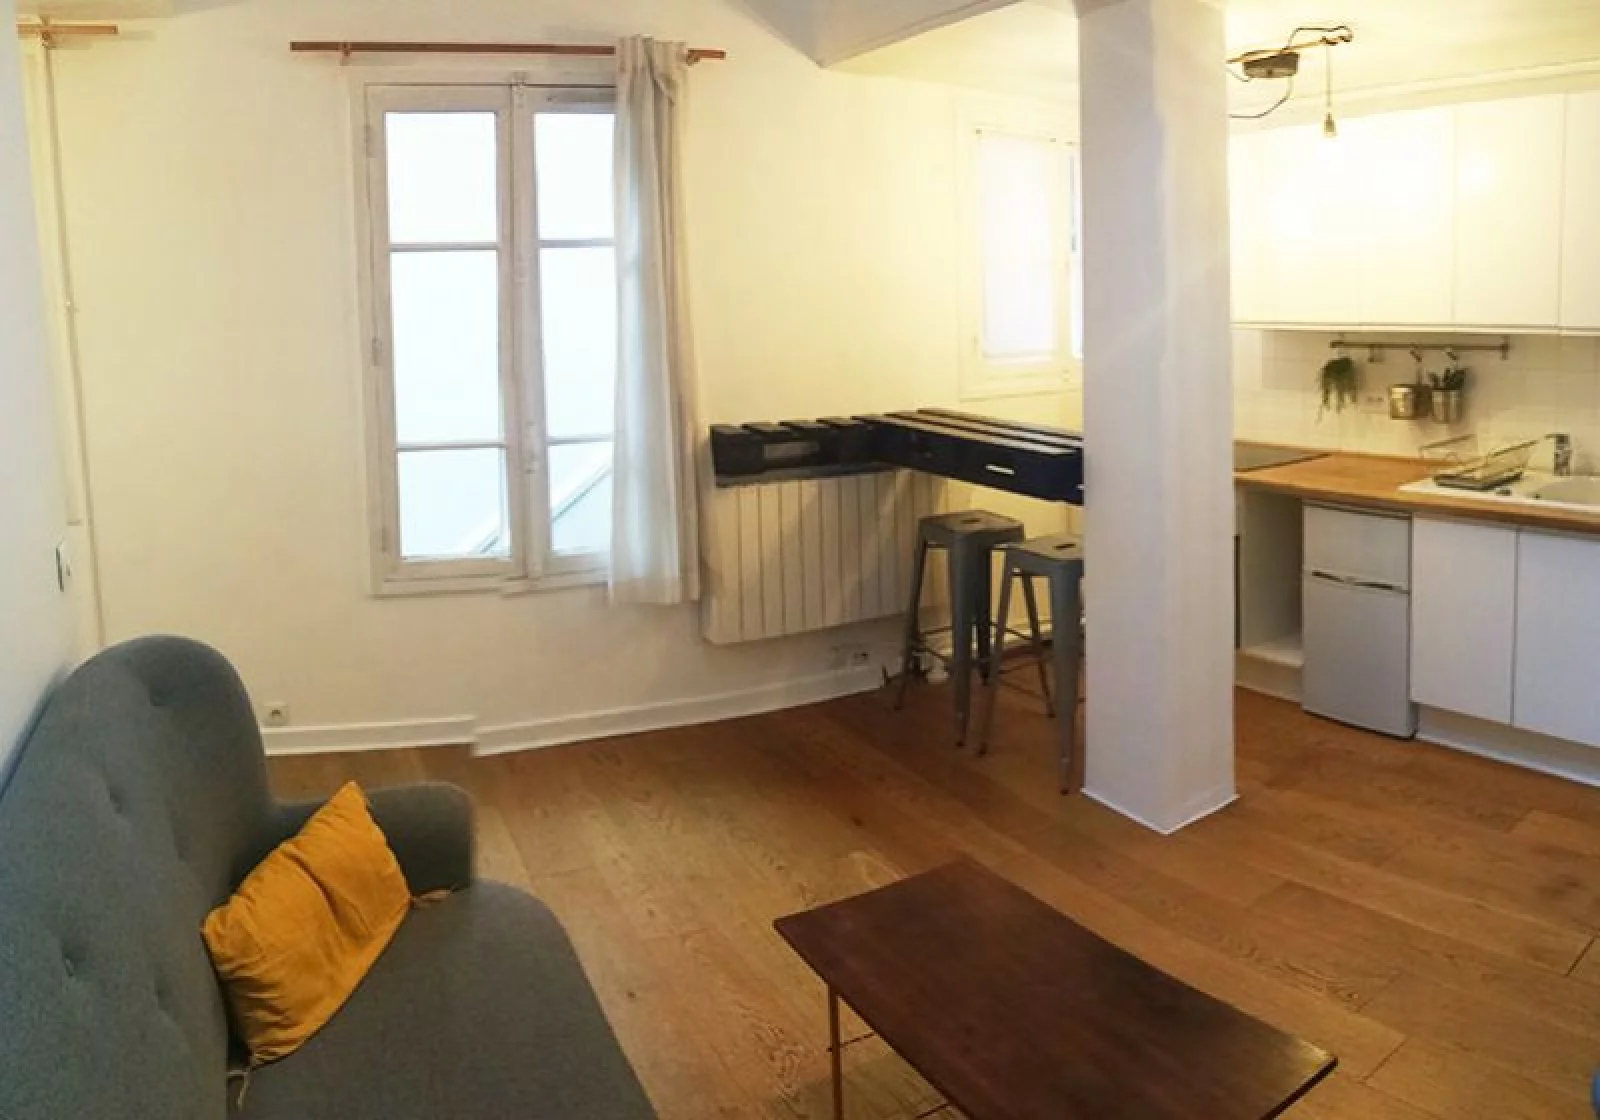 Location studio duplex meubl 22 m (Paris 18)